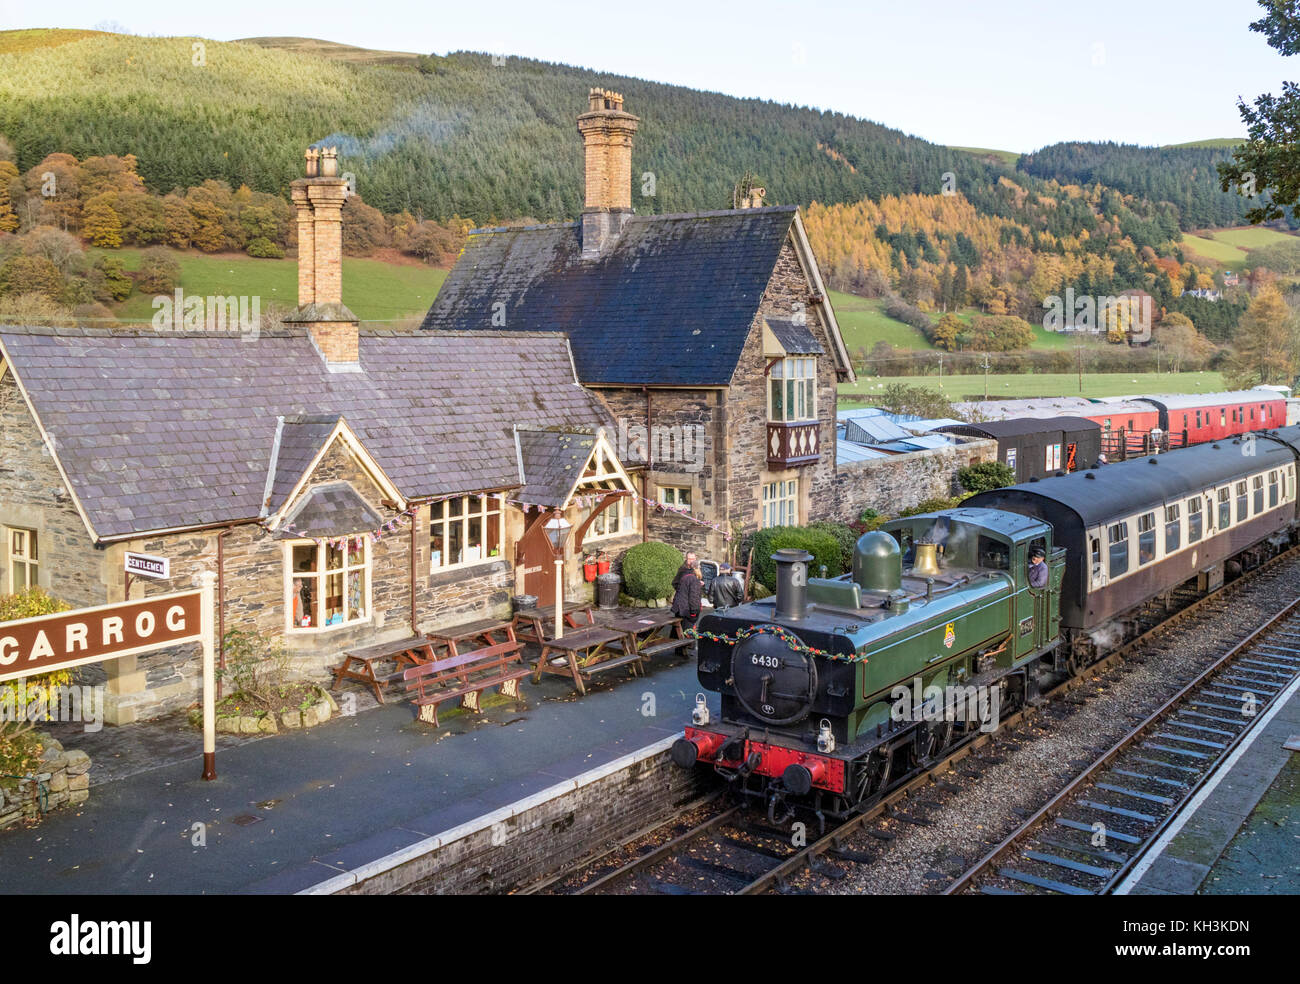 The Llangollen Railway (Welsh: Rheilffordd Llangollen) at Carrog railway station,Carrog, Denbighshire, North Wales, UK Stock Photo